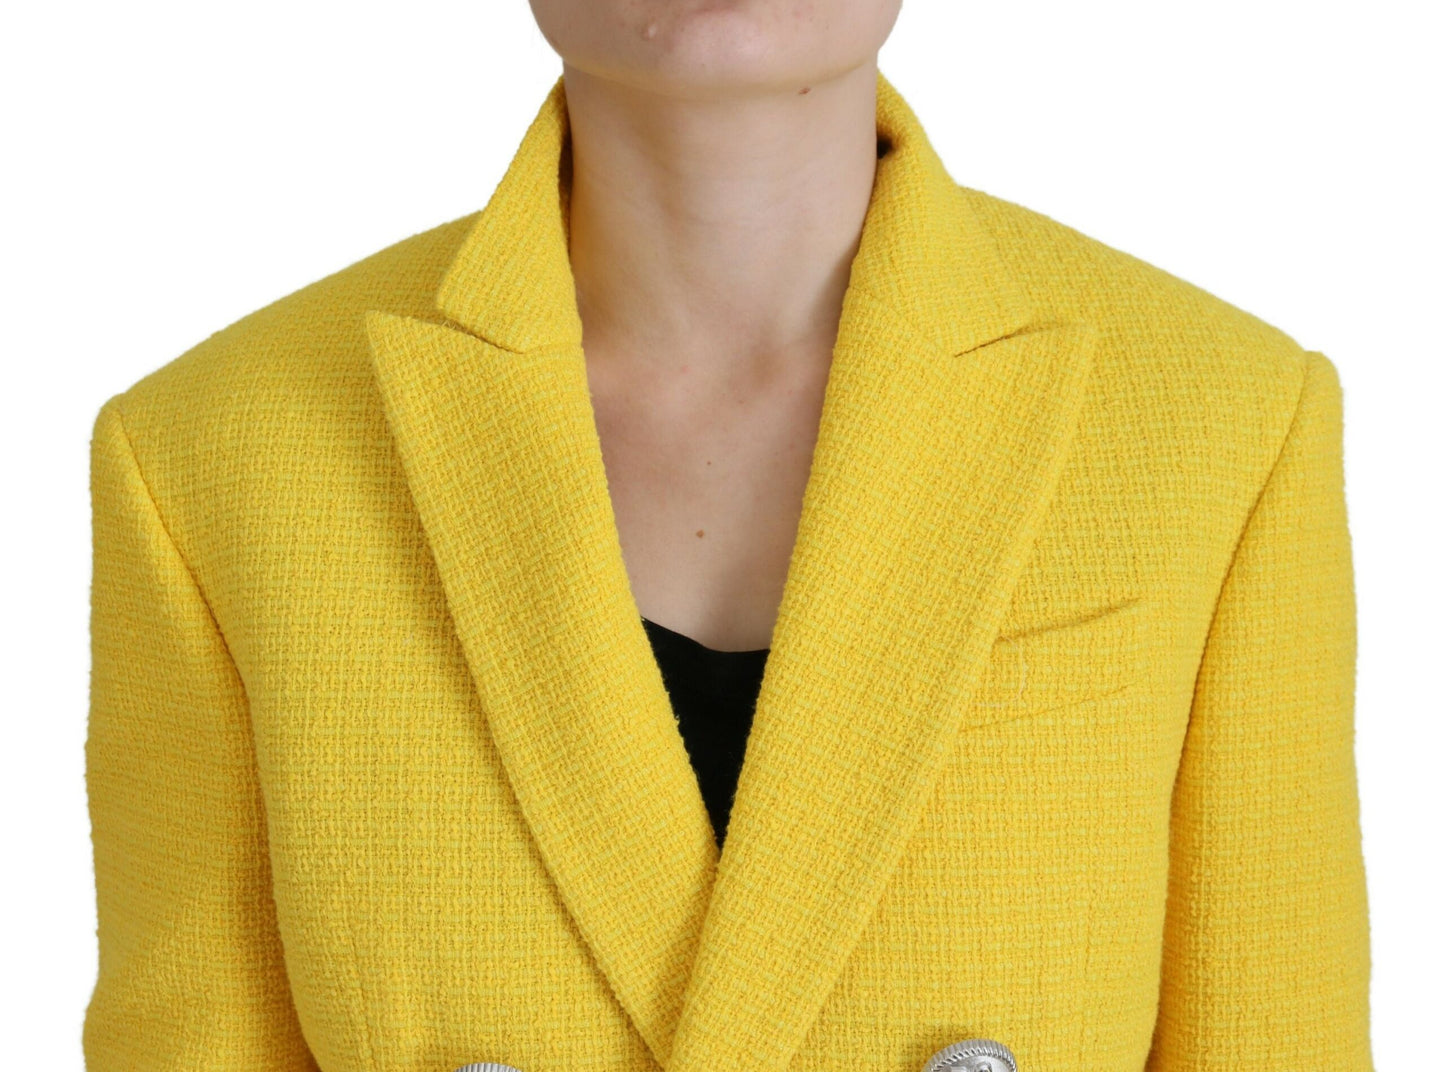 Yellow Peak Double Breasted Suit Blazer Short Set